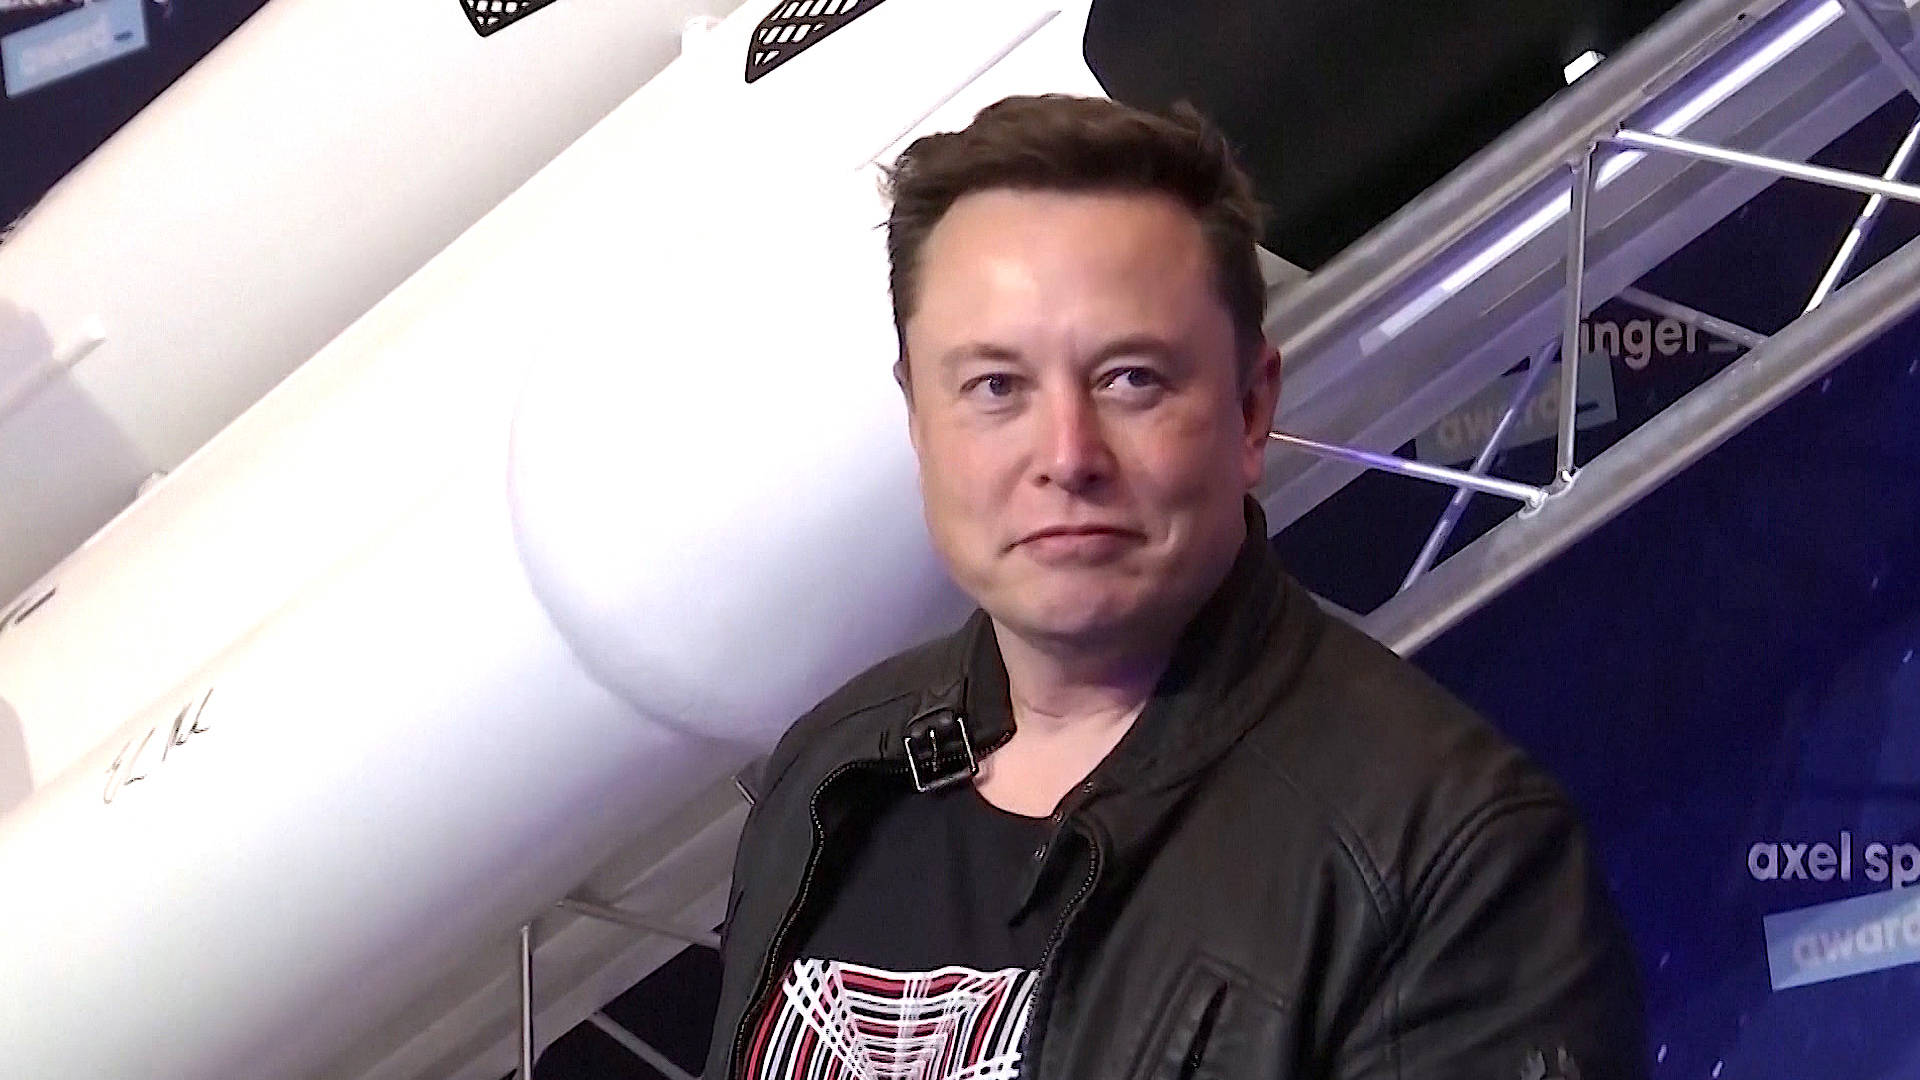 Elon Musk: from bullied schoolboy to world's richest man